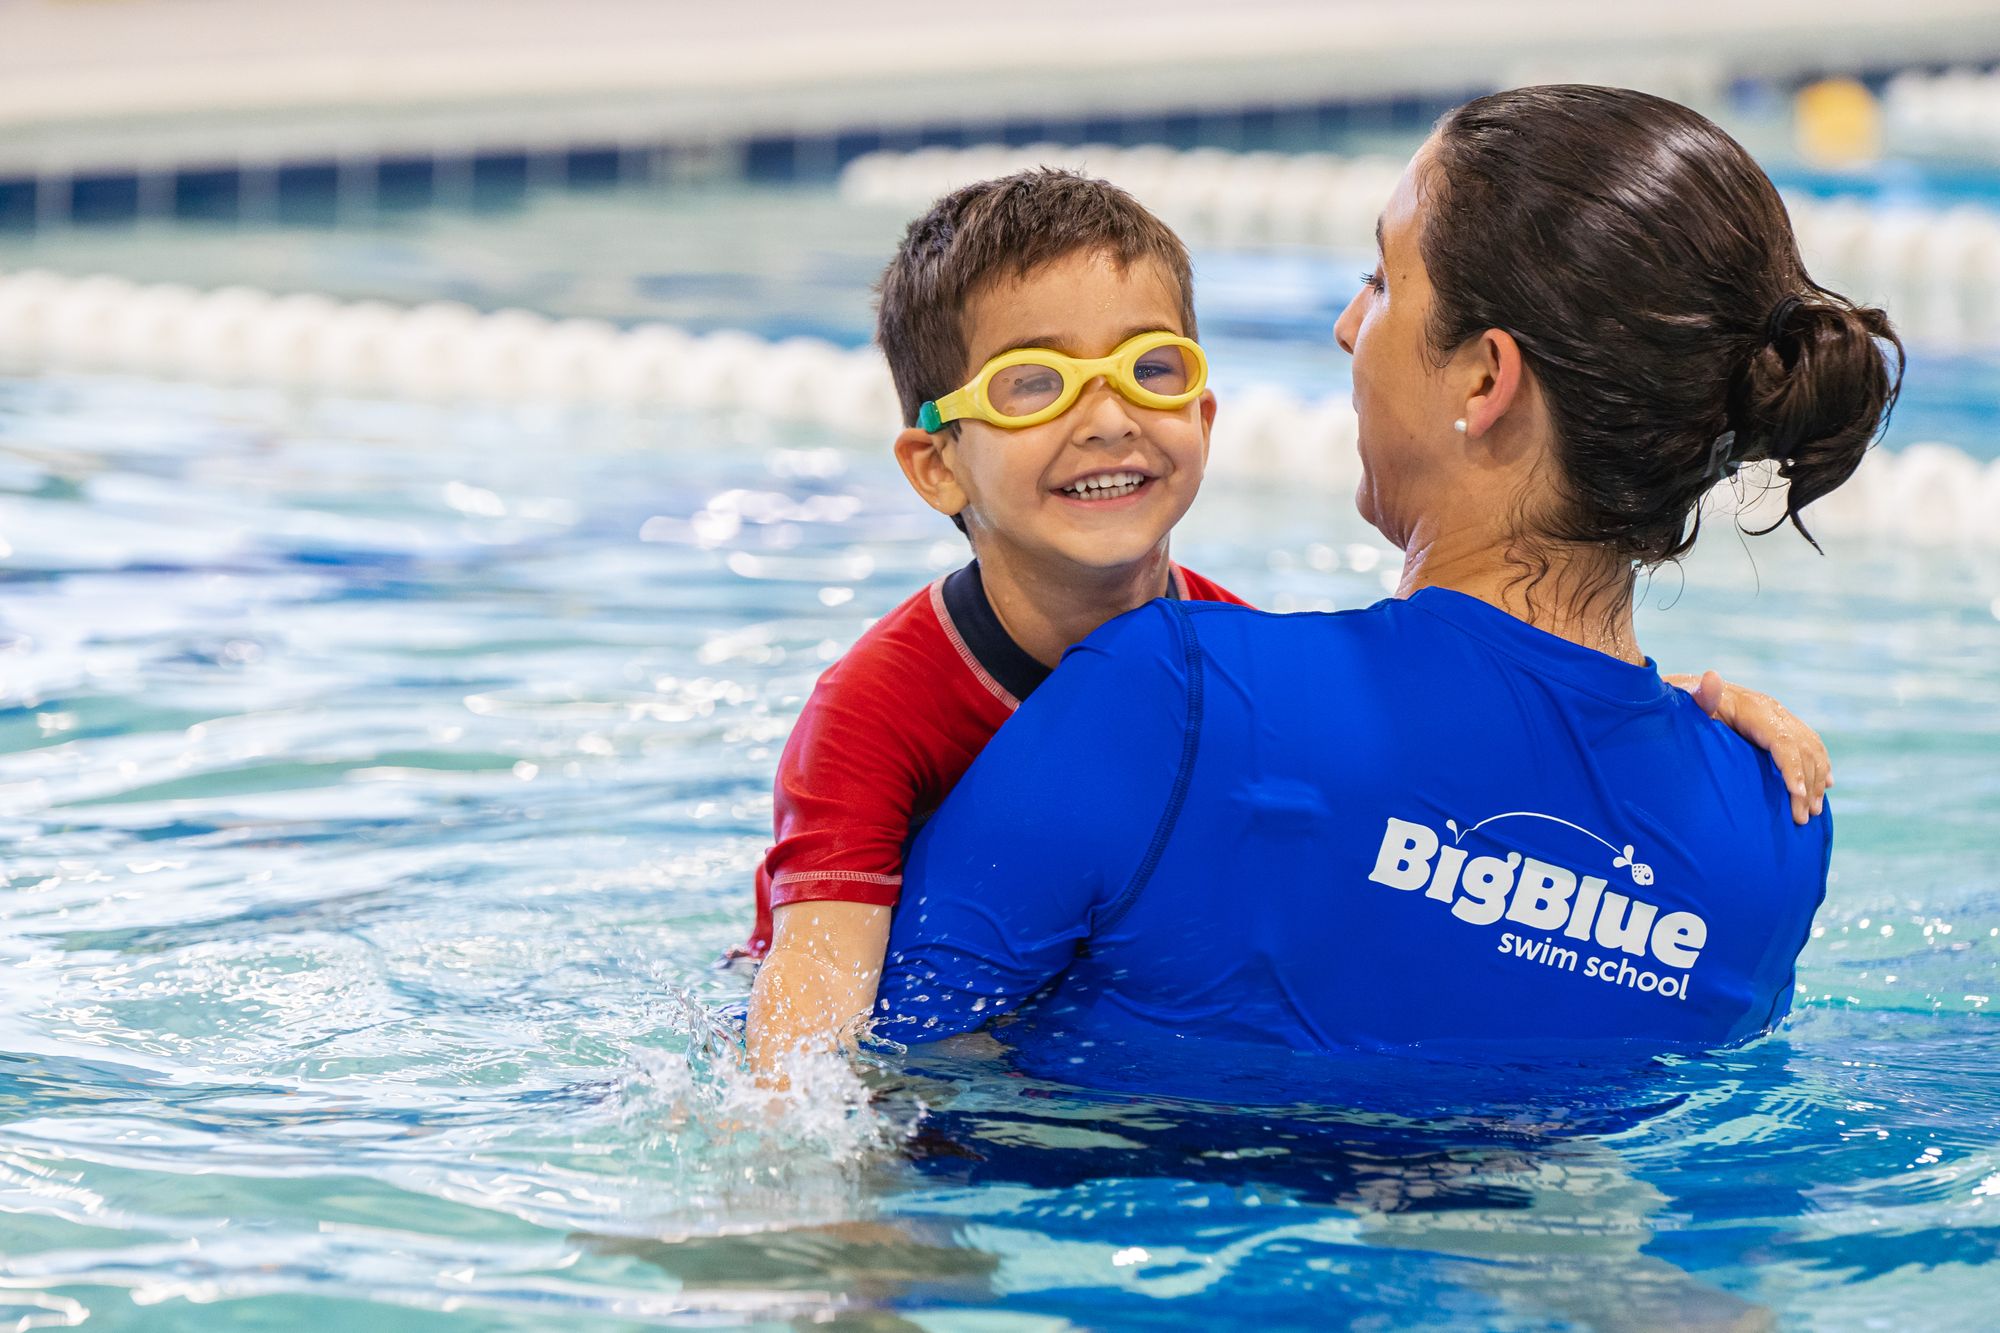 Big Blue Swim School - Coming Soon to John's Creek, GA